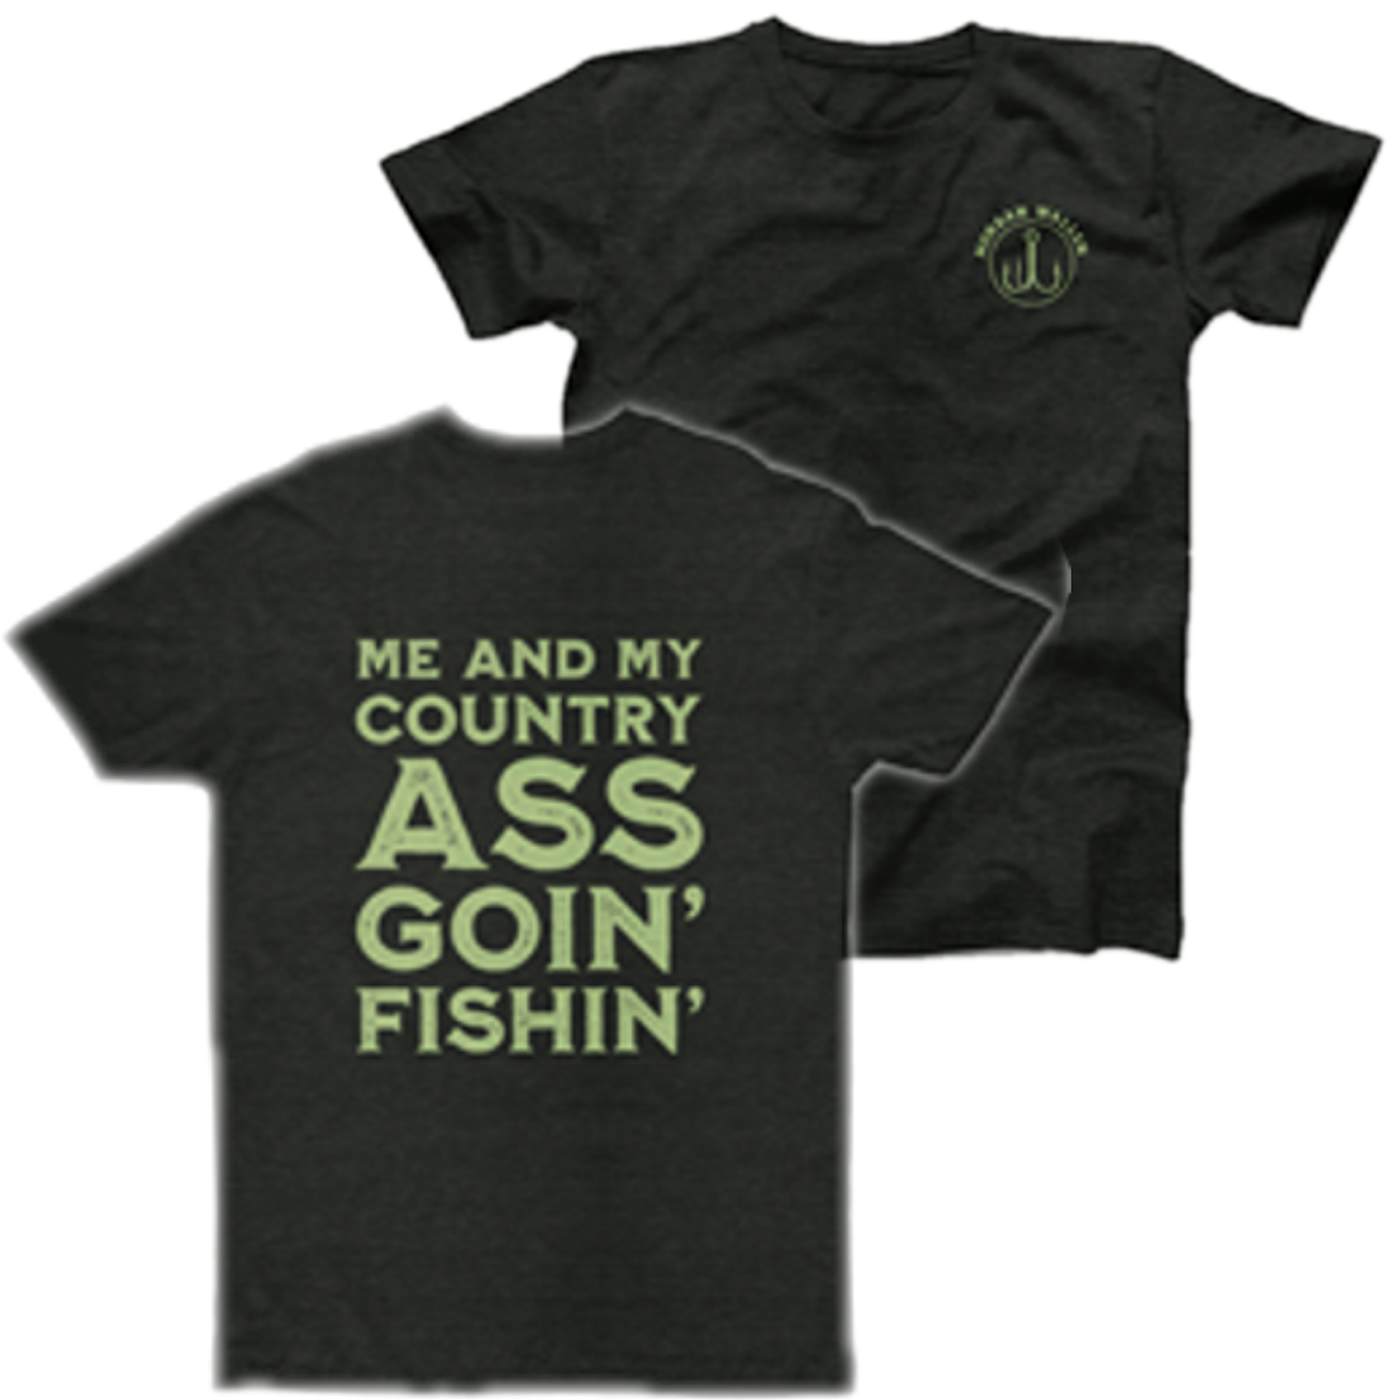 Morgan Wallen Goin' Fish' T-Shirt